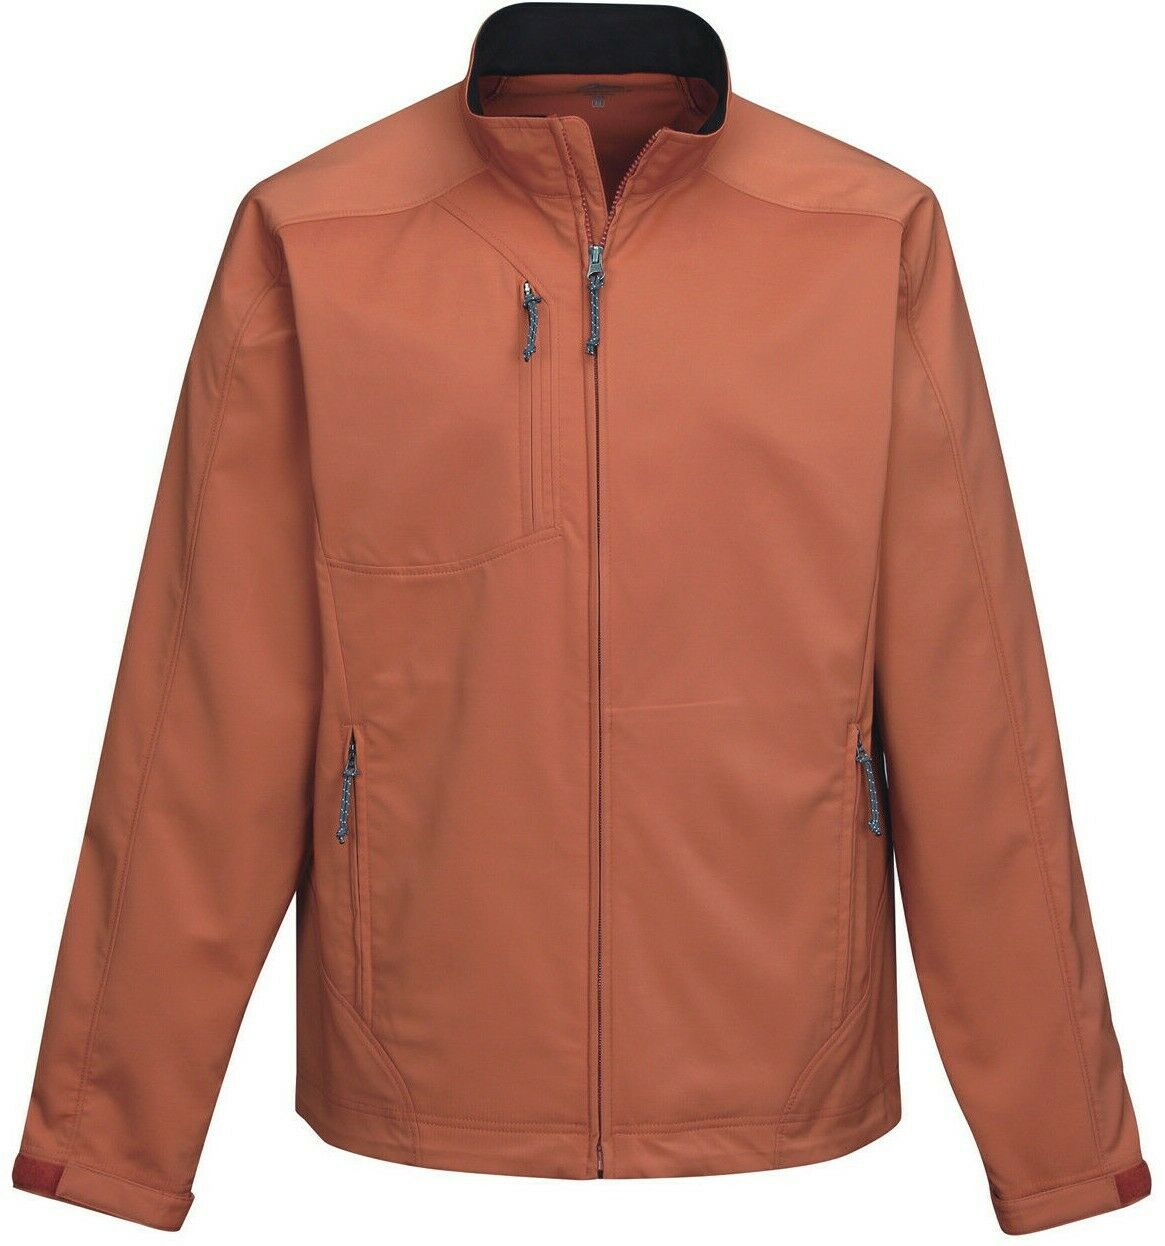 MENS JACKET Wind Breaker Casual jacket-Adjustable Cuff Pockets Tri-Mountain